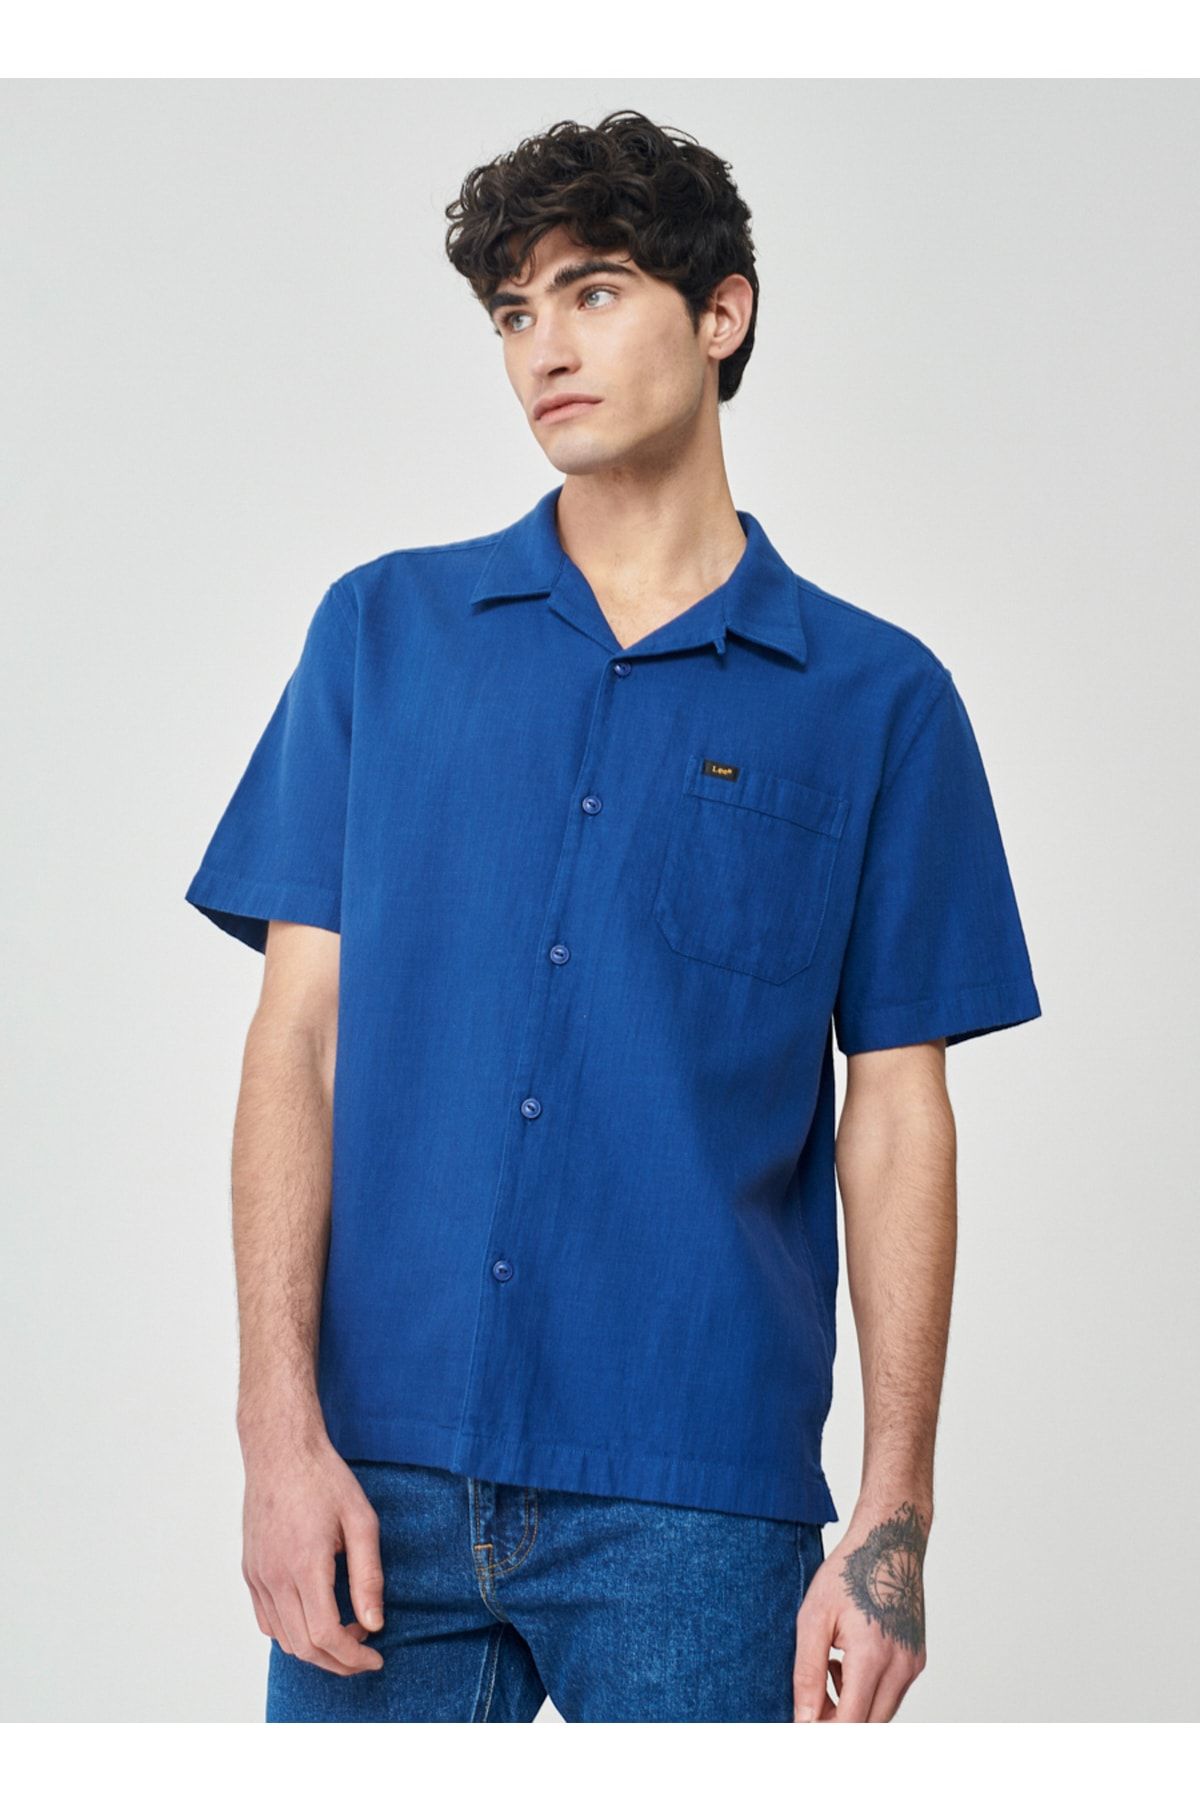 Lee Gömlek Yaka Mavi Erkek T-shirt L67pldla_kısa Kollu Gömlek